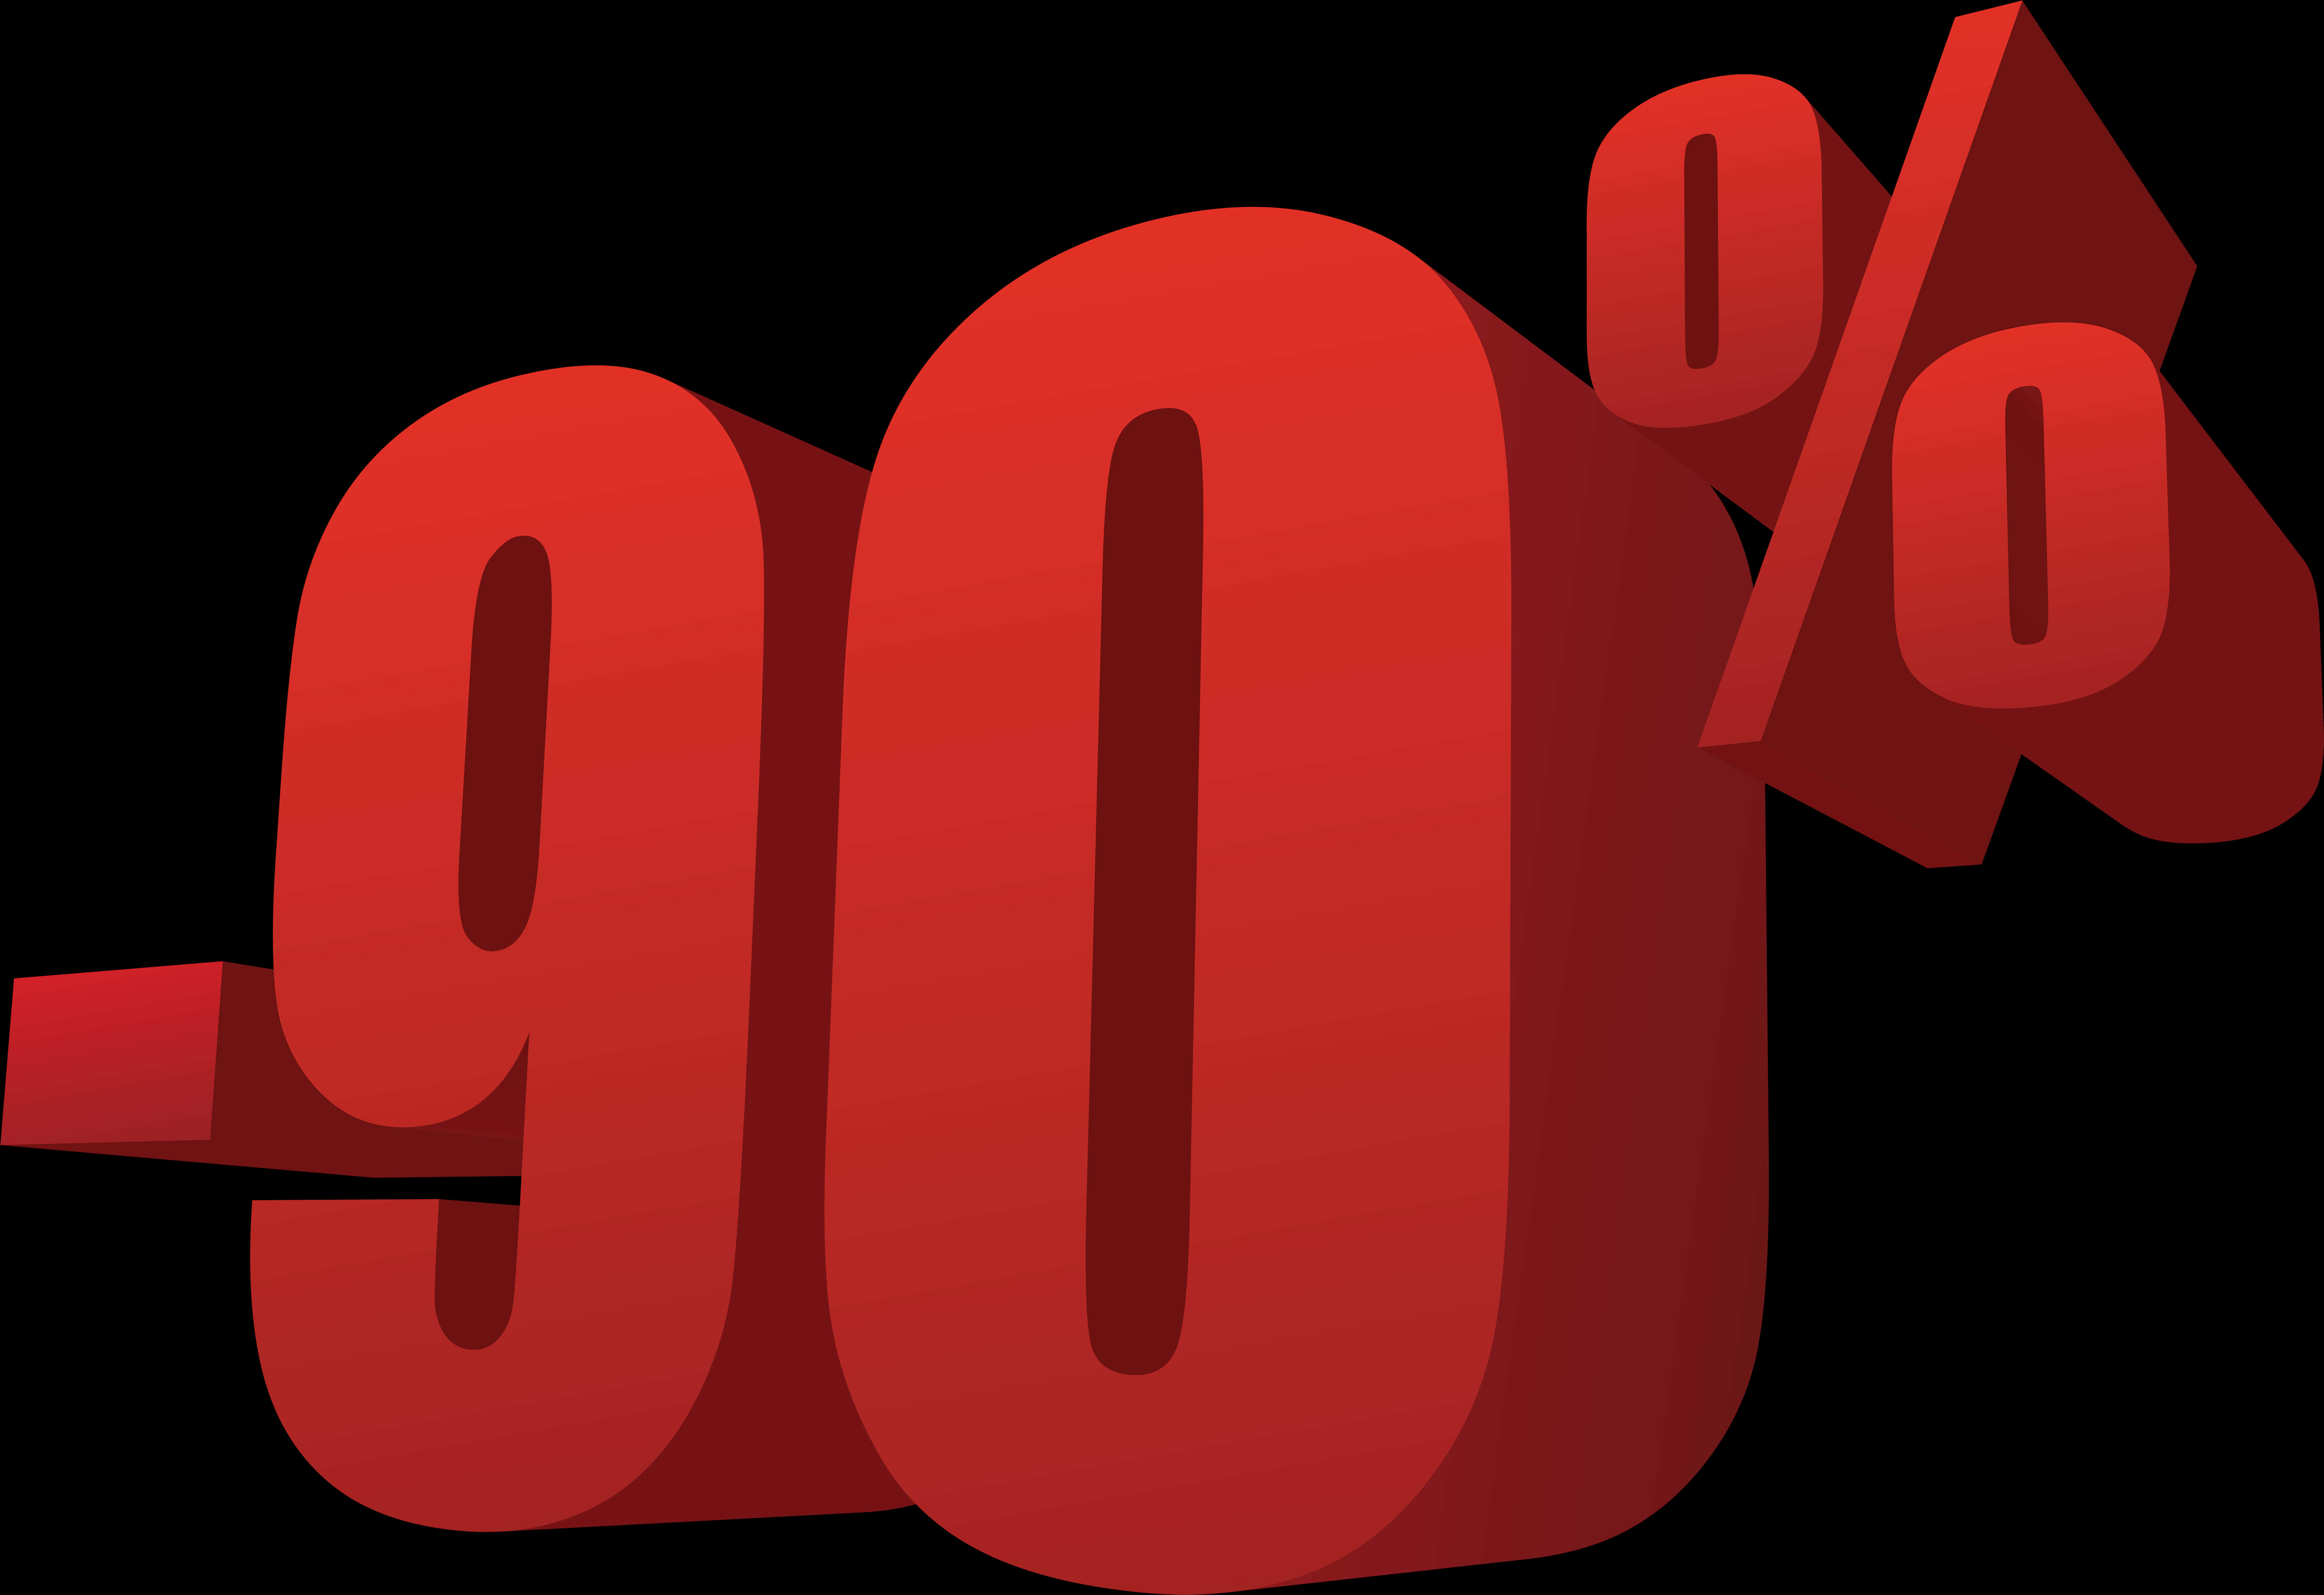 90 Percent Discount Sign PNG image